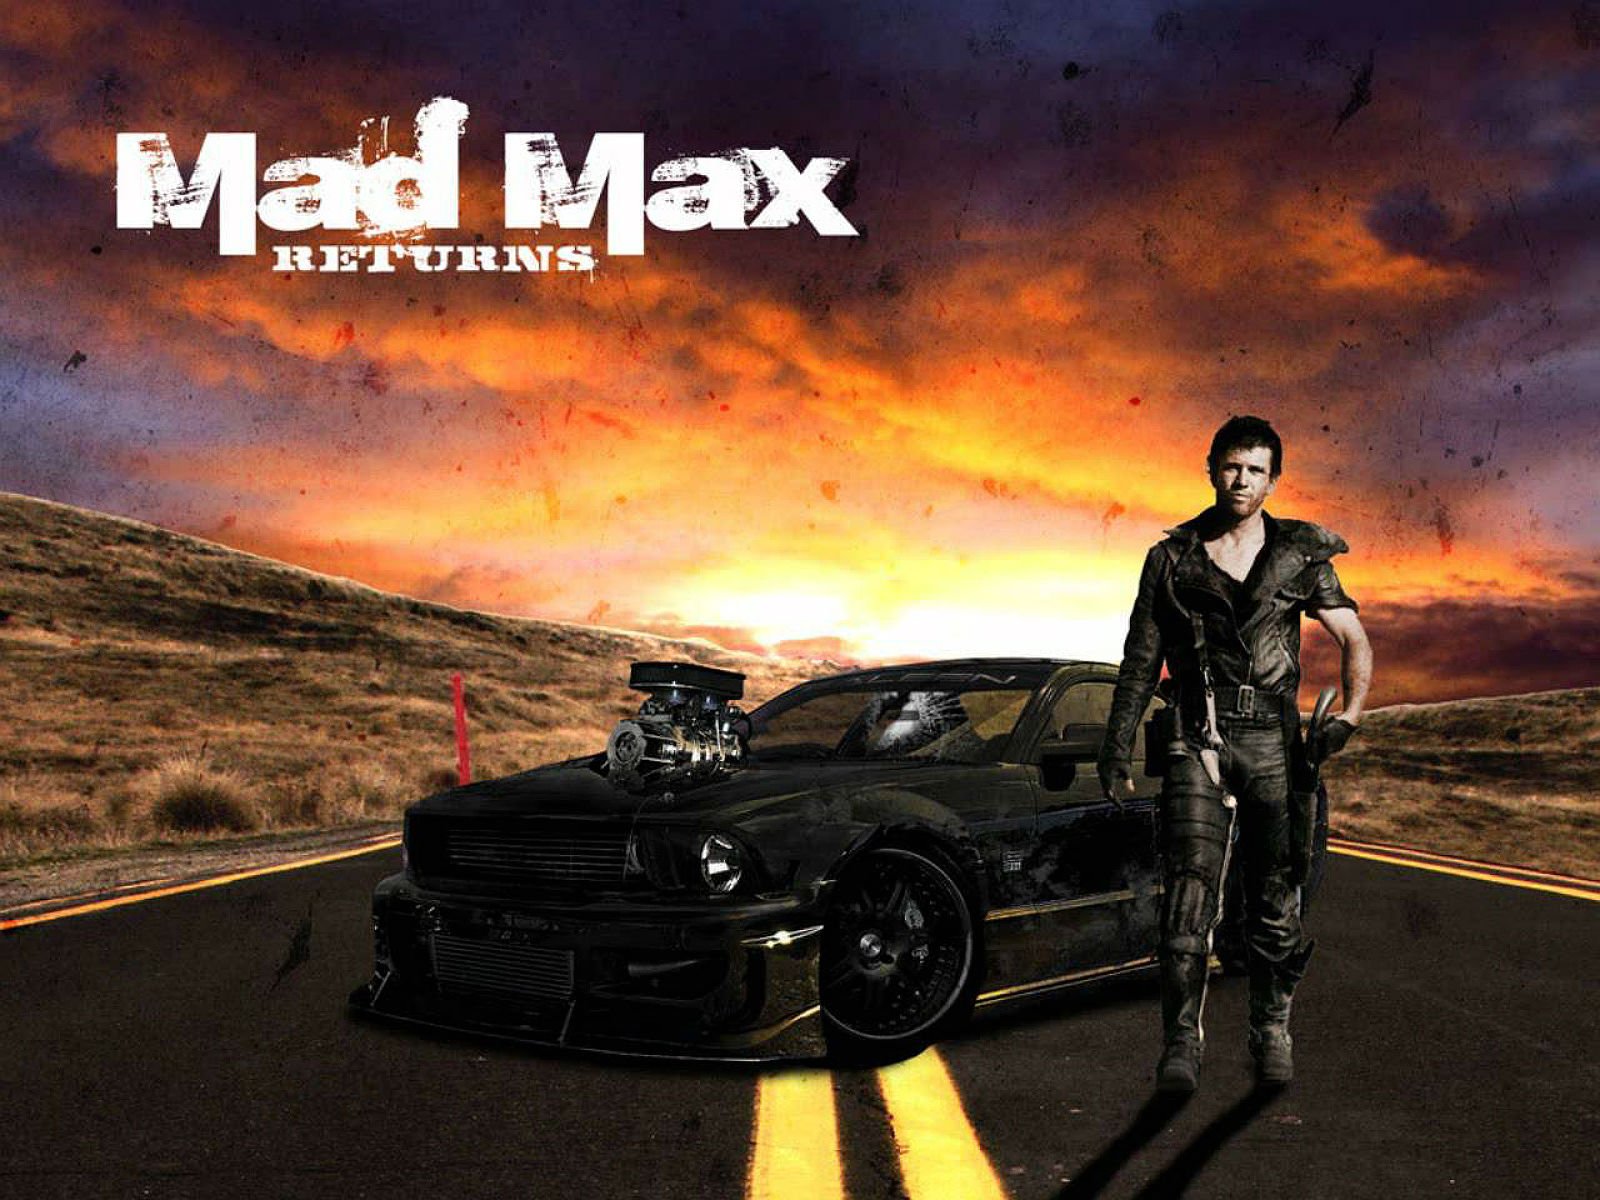 mad, Max, Action, Adventure, Thriller, Sci fi, Apocalyptic, Futuristic Wallpaper